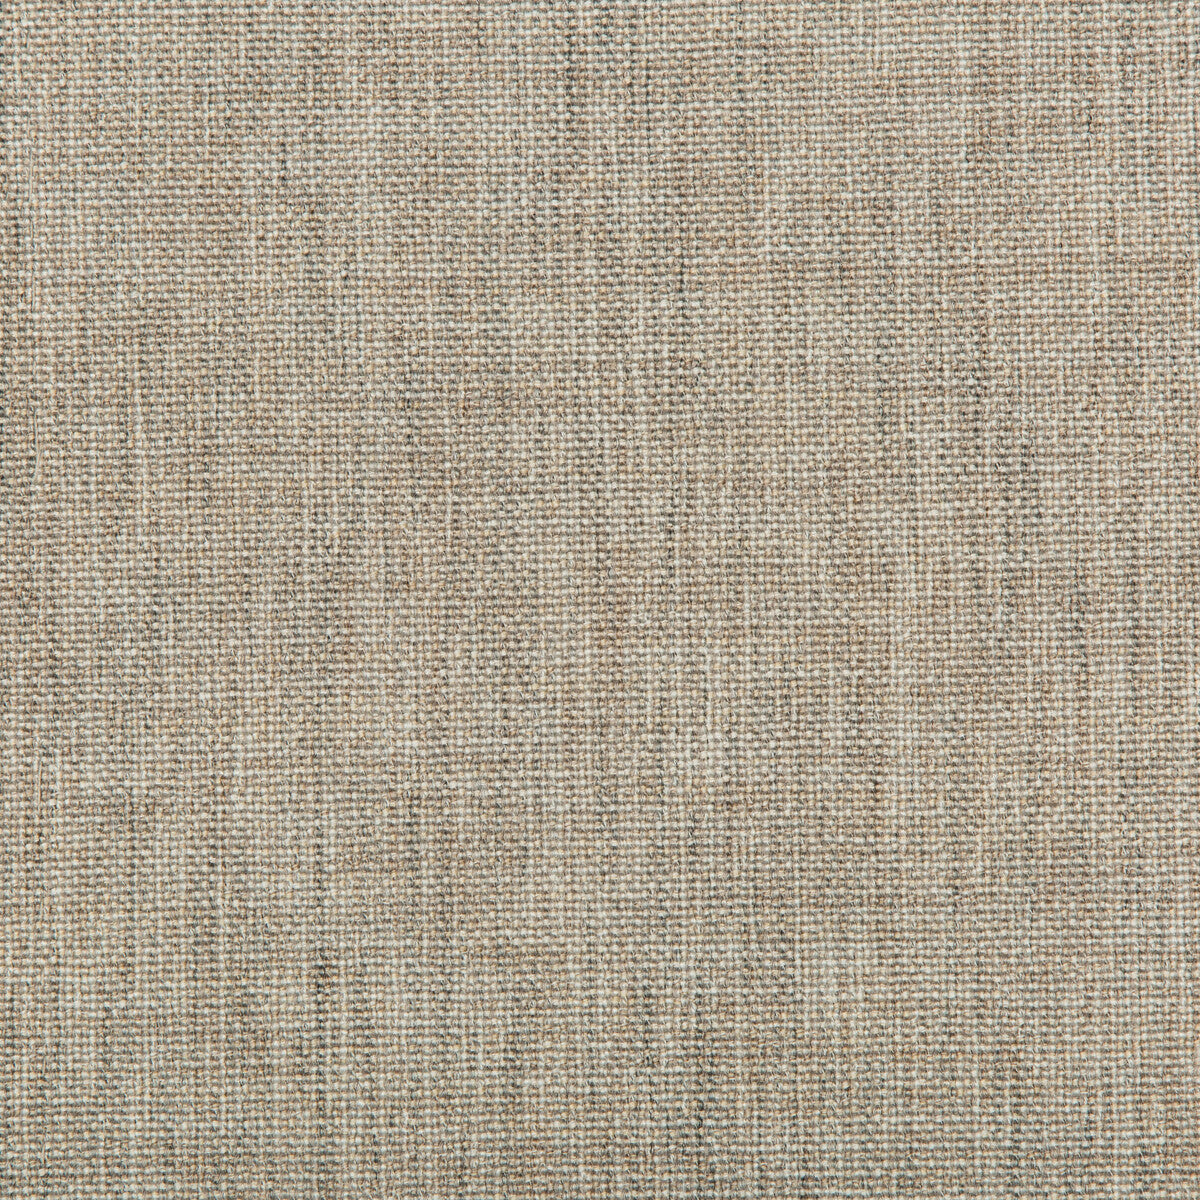 Kravet Smart fabric in 32959-11 color - pattern 32959.11.0 - by Kravet Smart